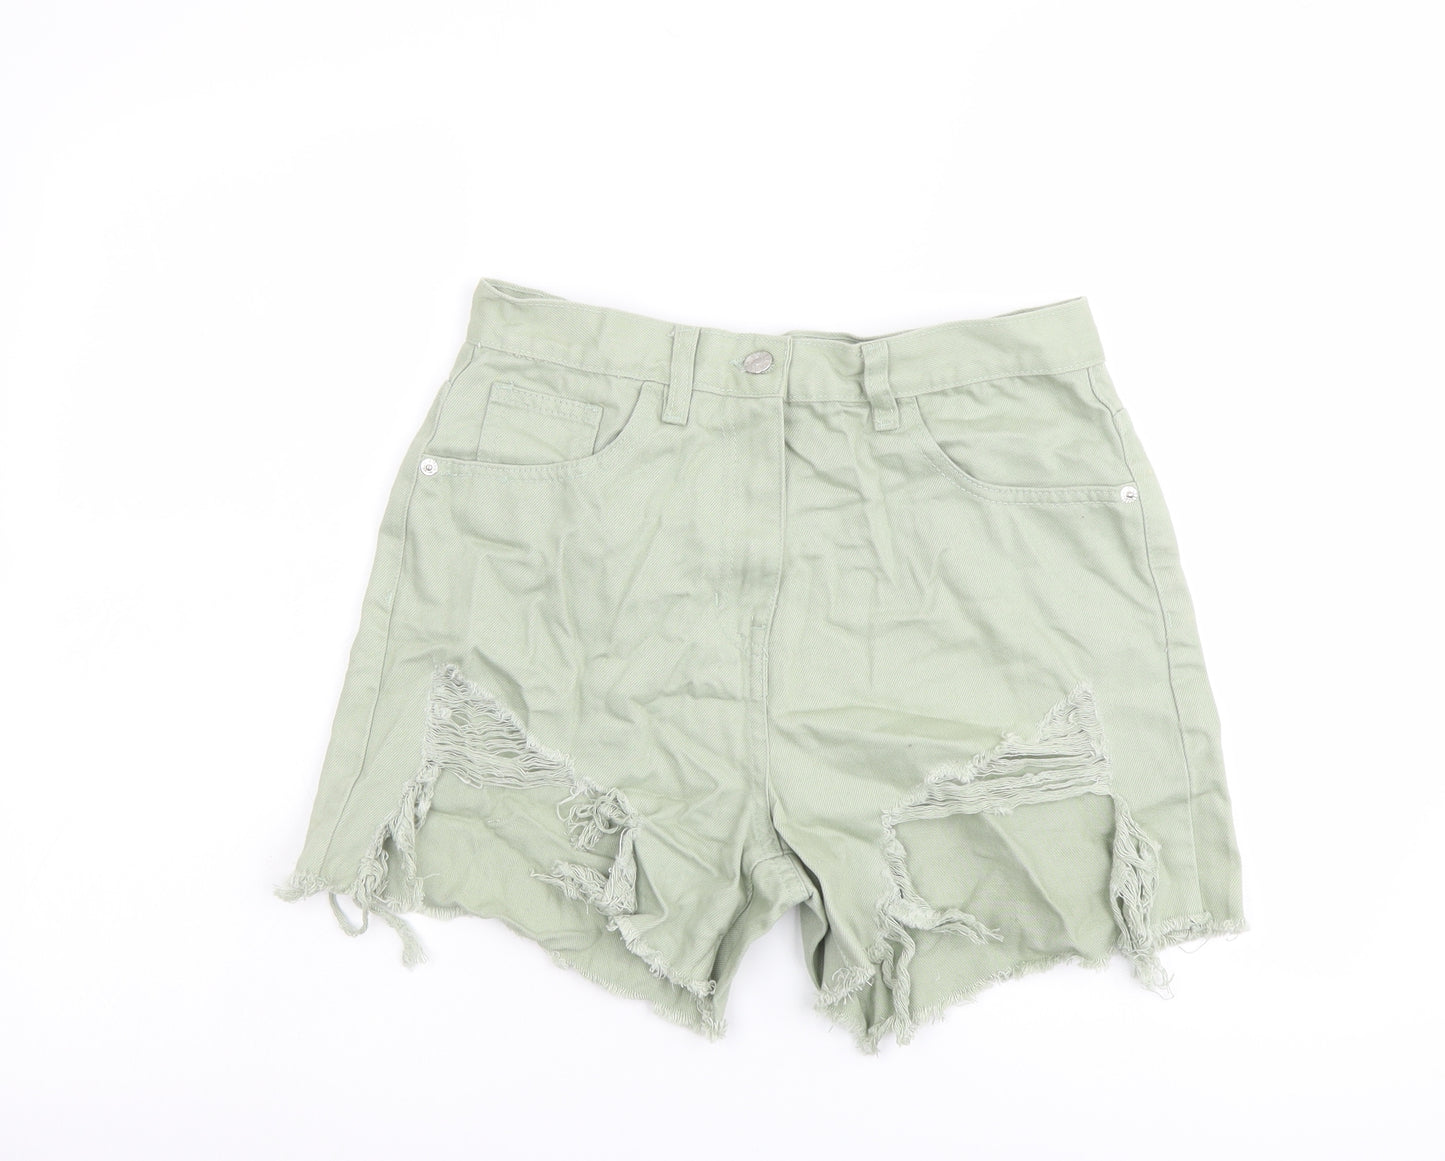 Rebellious Womens Green Cotton Boyfriend Shorts Size 10 L4 in Regular Button - Distressed Look Raw Hems